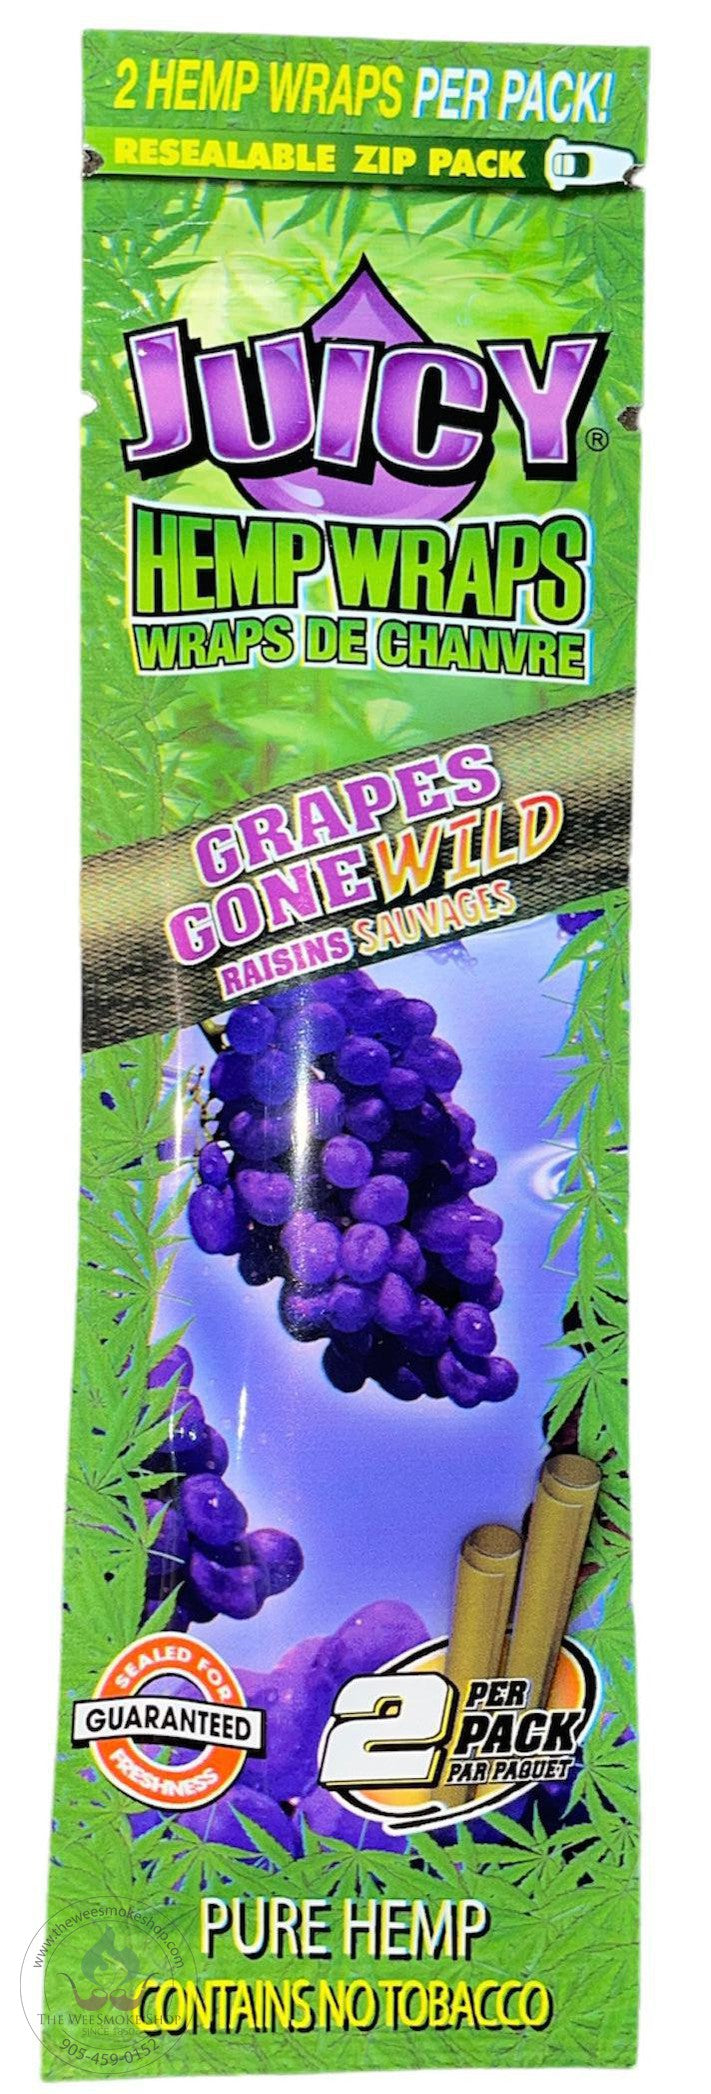 Juicy Jay Hemp Wraps - Grapes Gone Wild - The Wee Smoke Shop